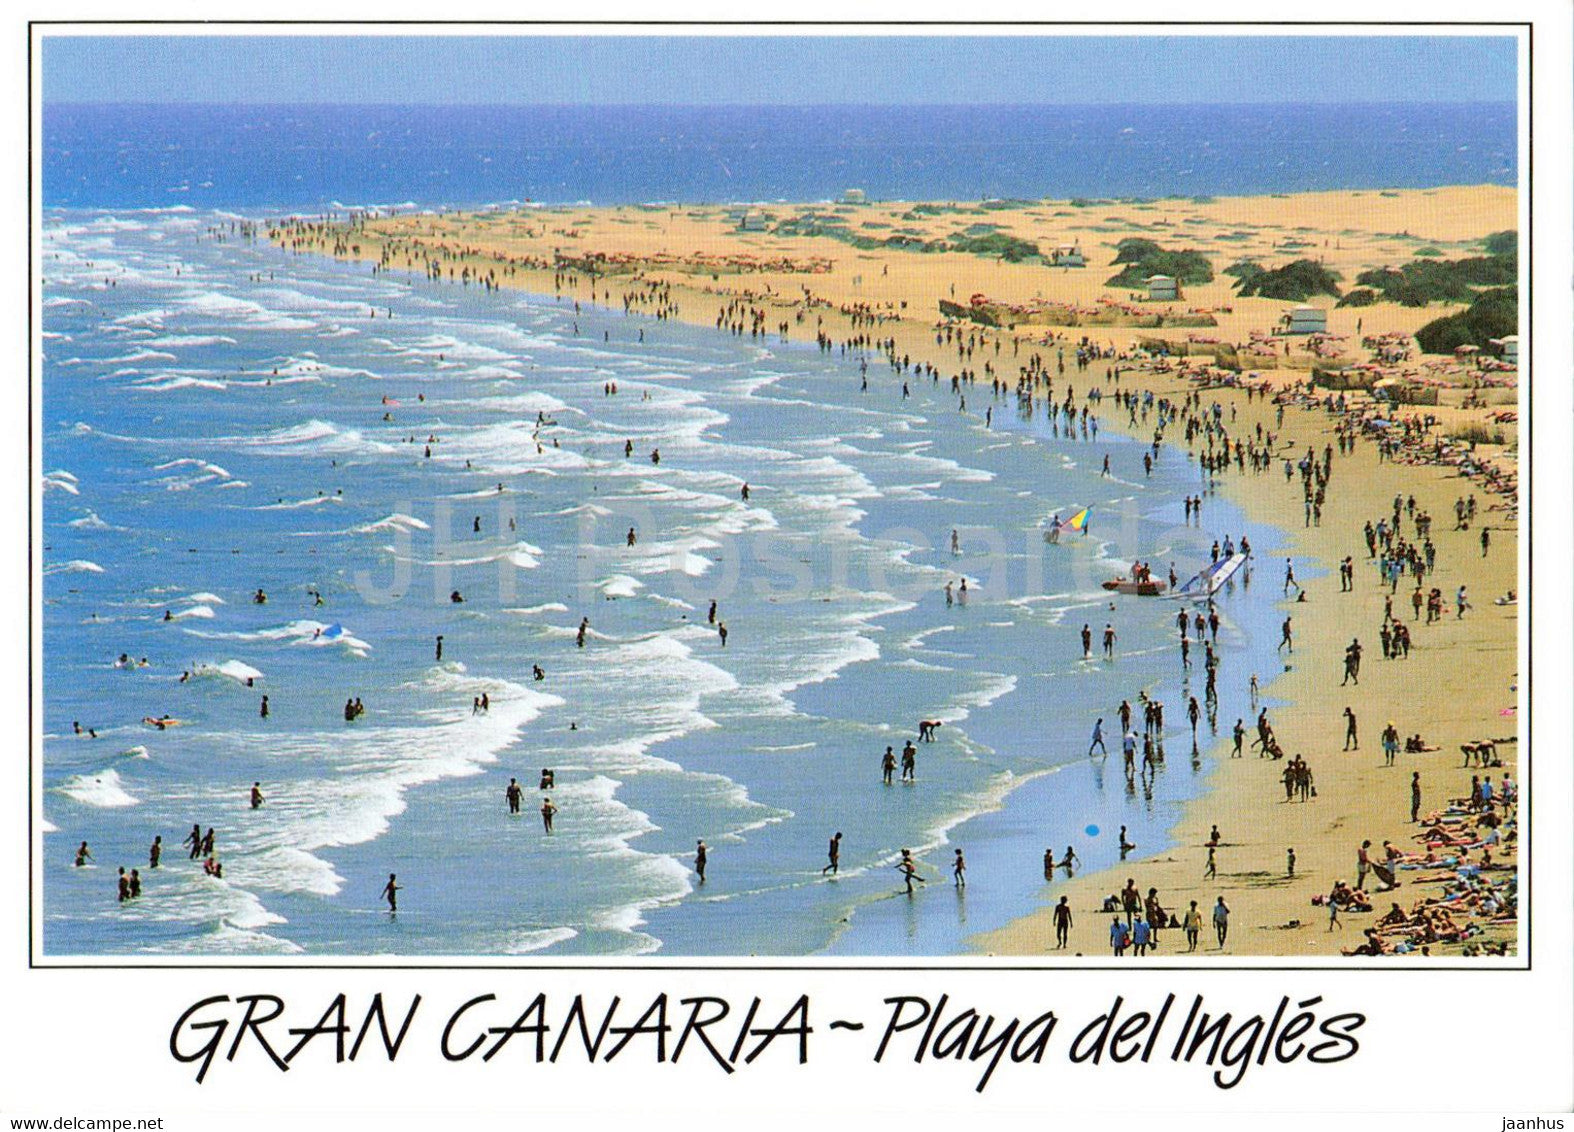 Gran Canaria - Playa del Ingles - beach - 224 - Spain - used - JH Postcards